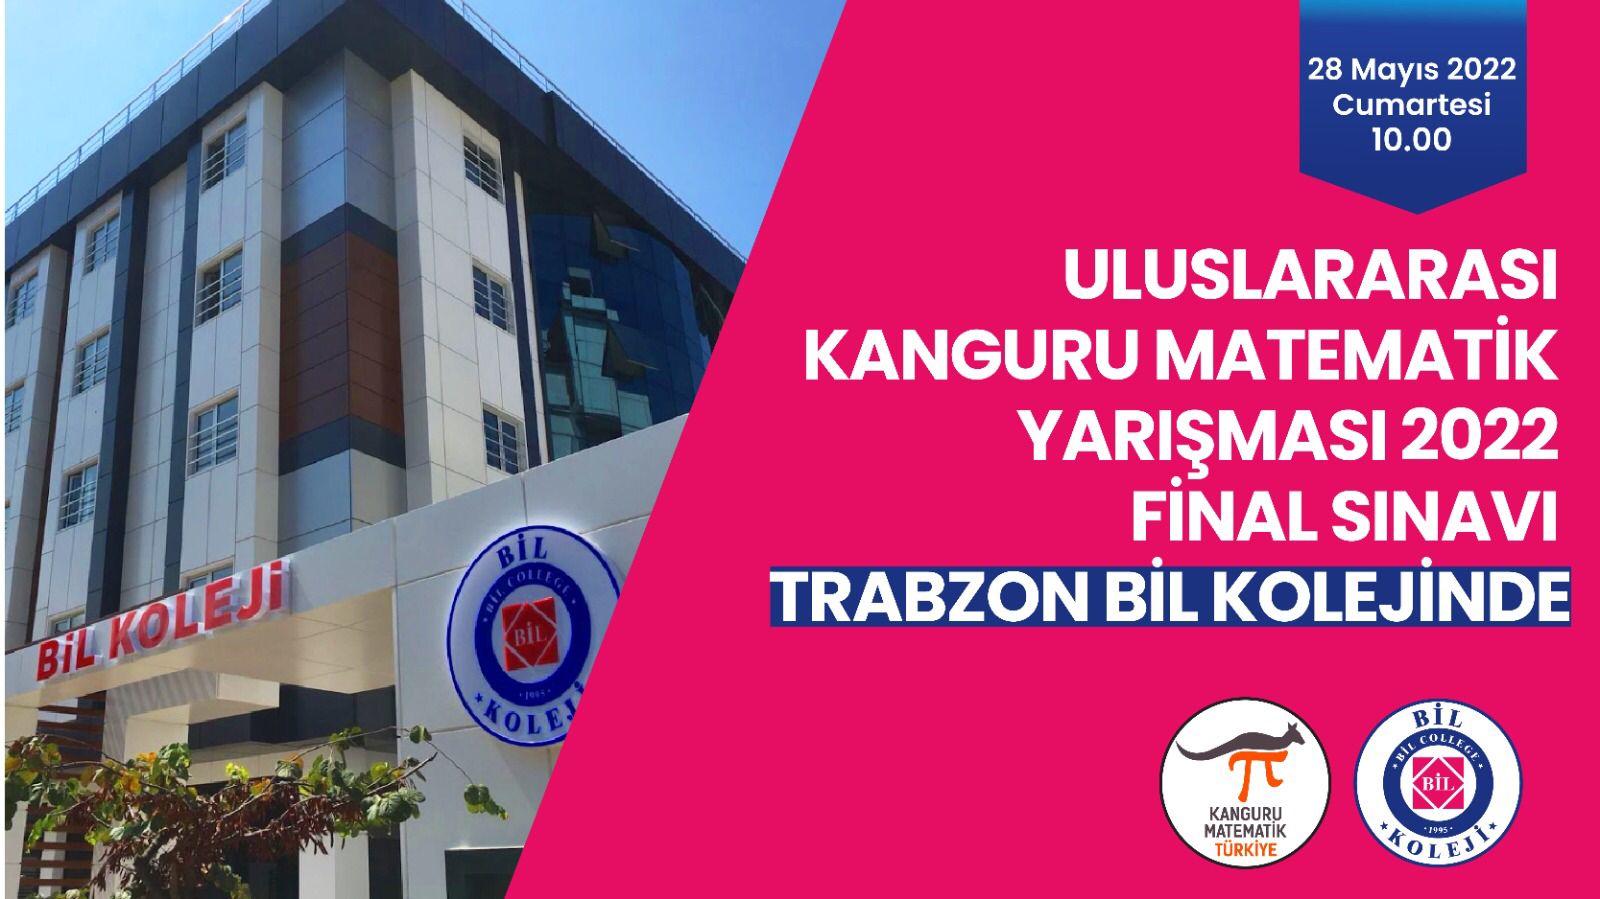 Trabzon BL Kolejin'den Duyuru